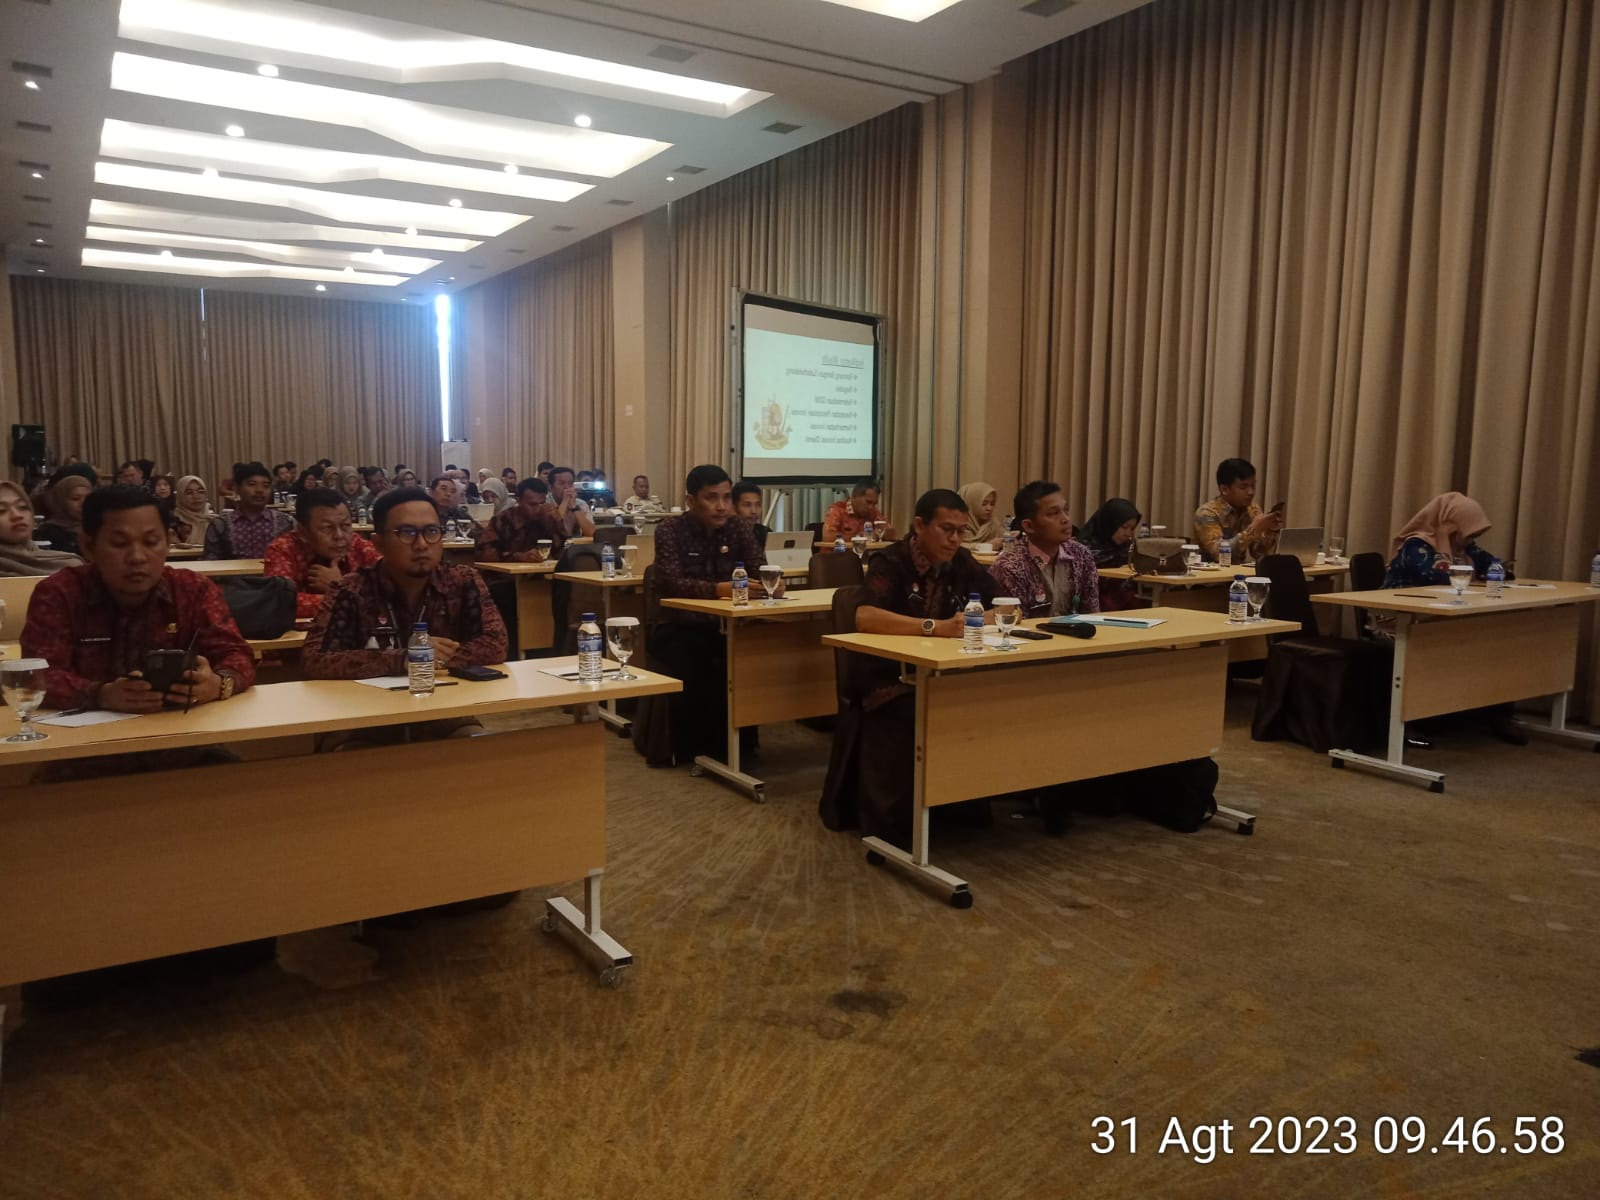 Kegiatan Rapat Pembahasan Muatan Tematik "Inovasi Daerah" Dalam Rangka Penyusunan Perubahan RPJMD Provinsi Jambi tahun 2021-2026.